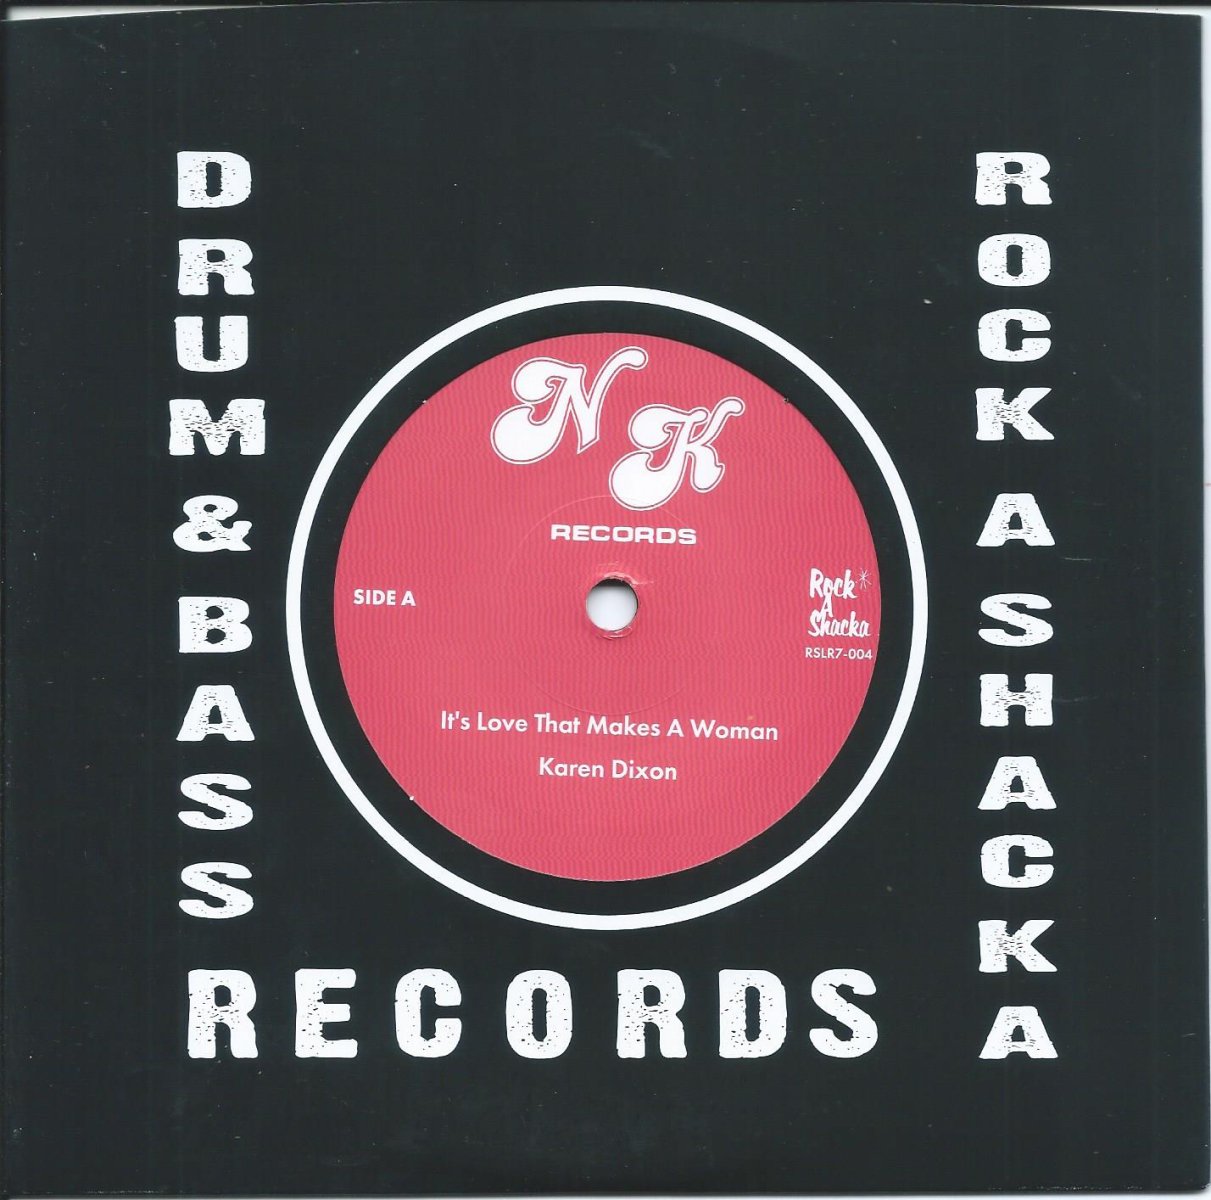 REGGAE - 45's / 7INCH - HIP TANK RECORDS